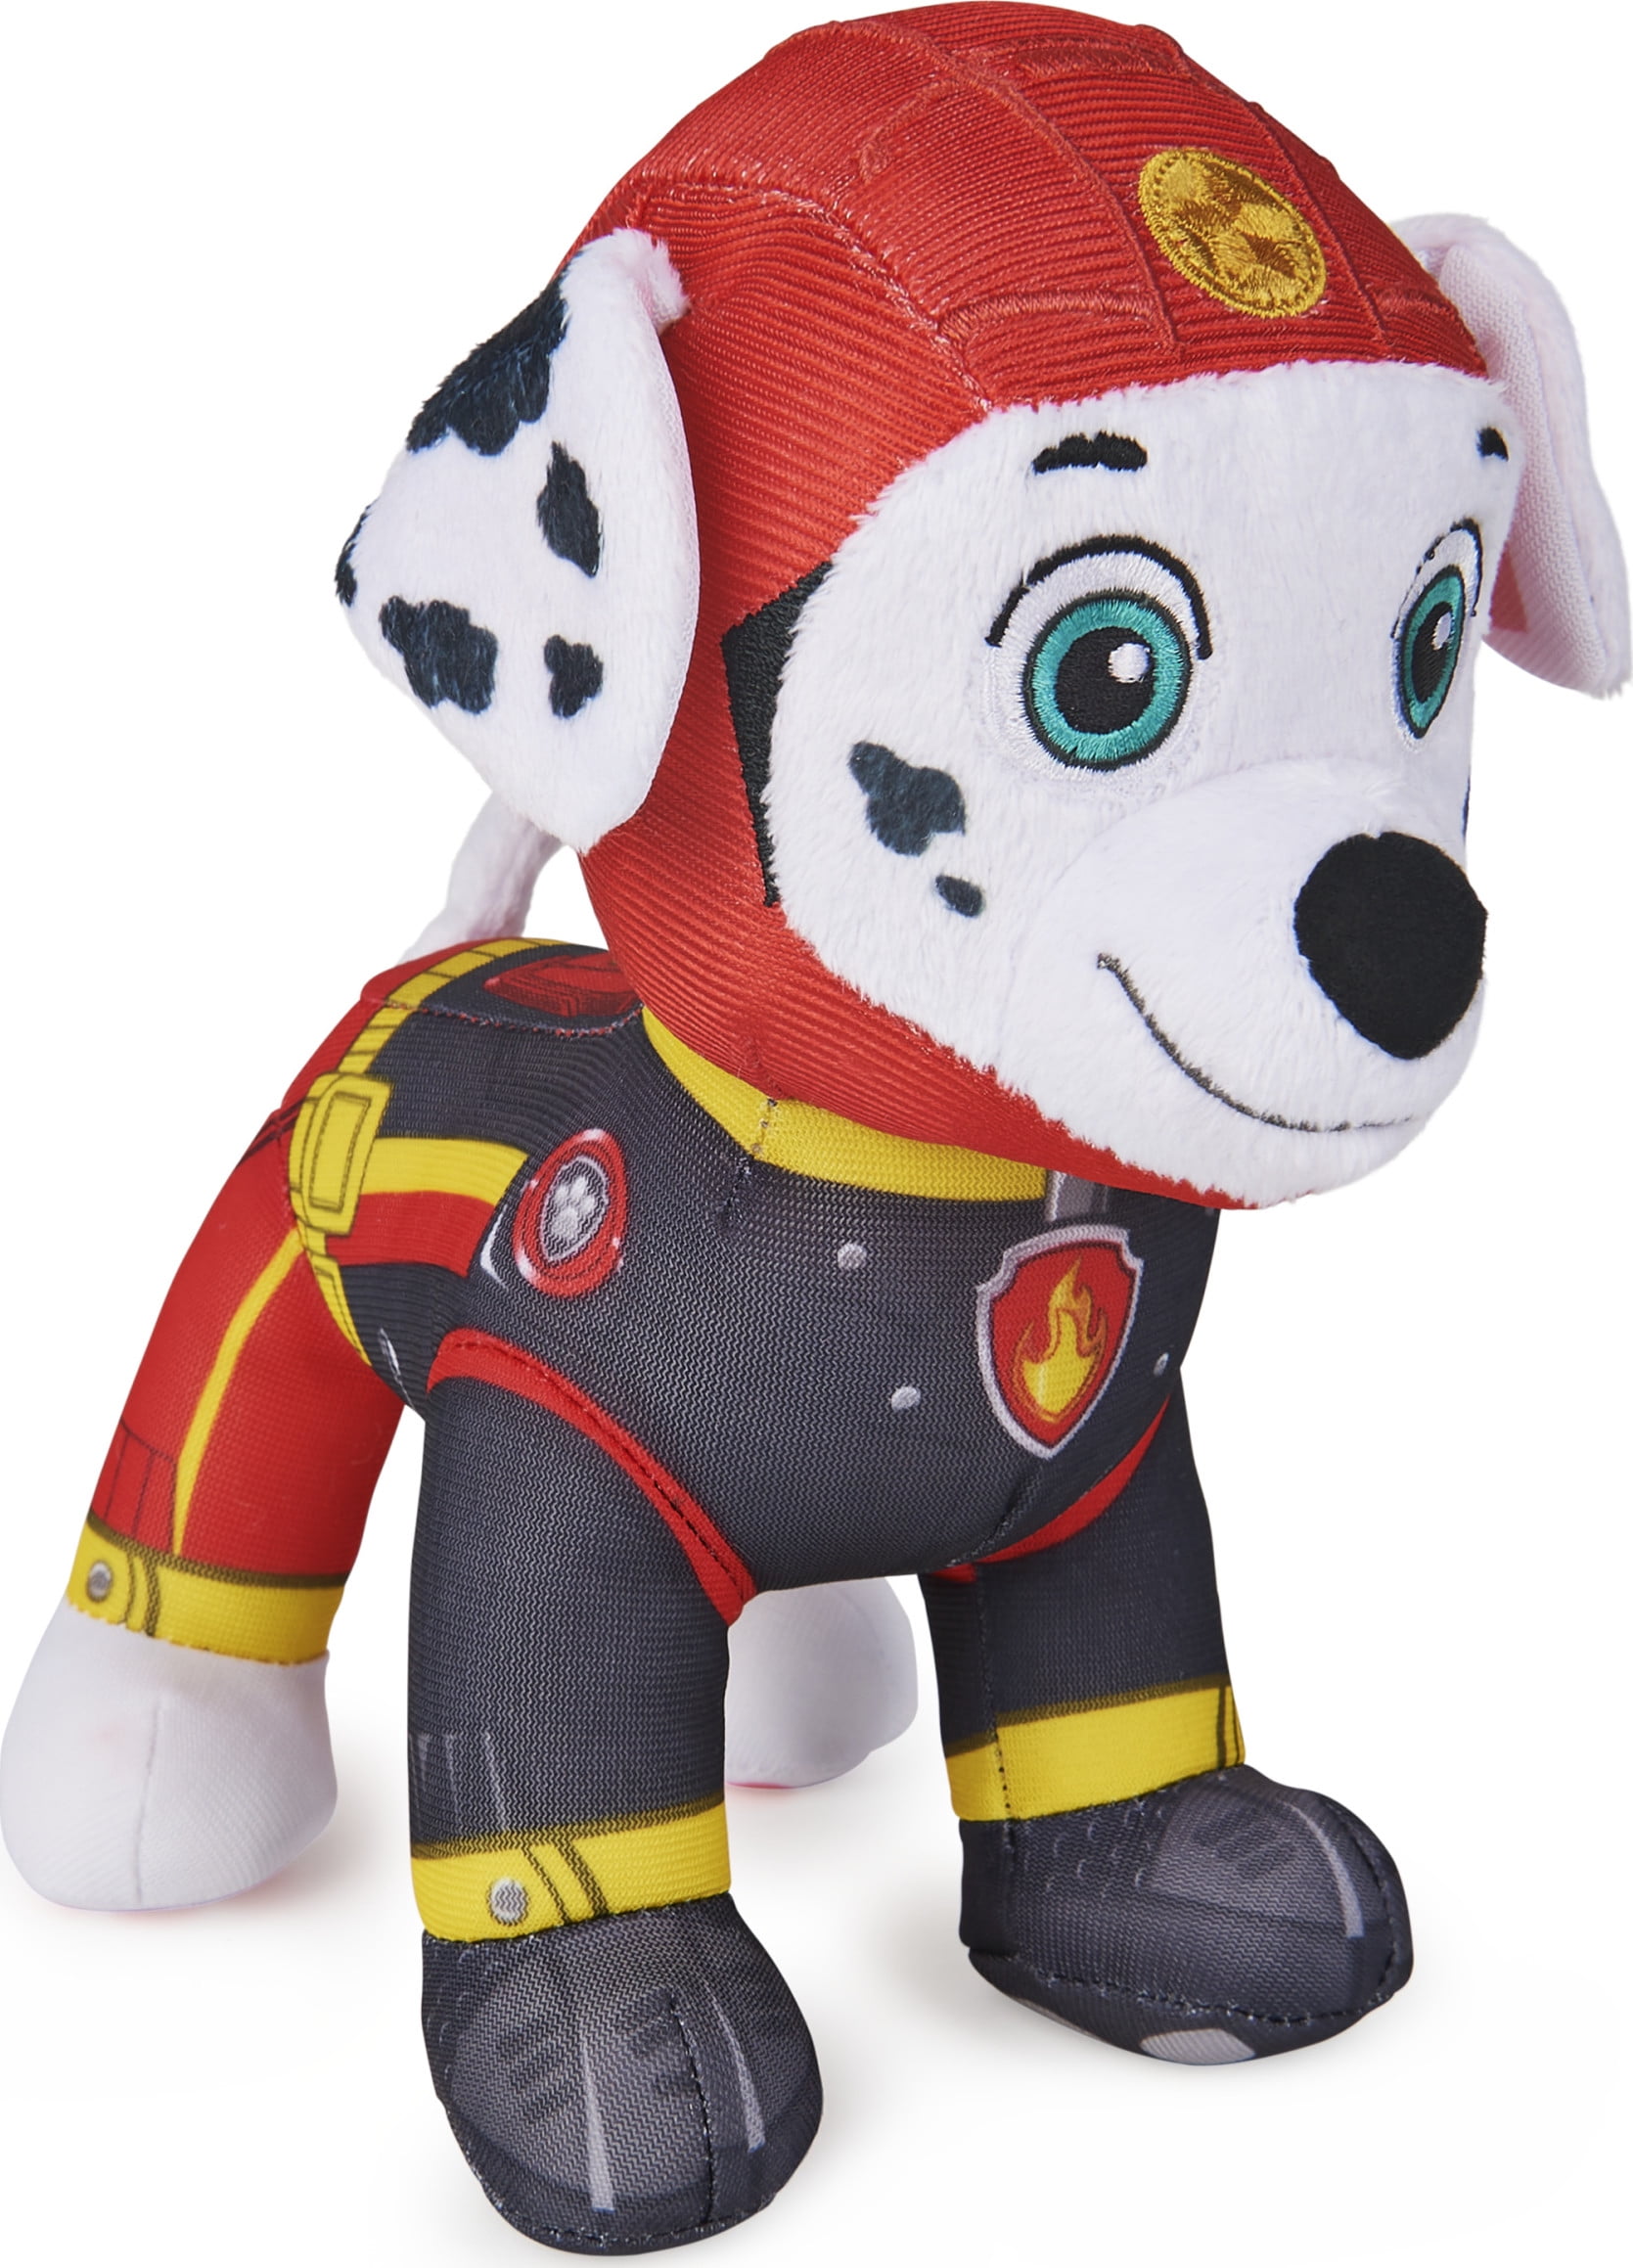 Xlarge New Paw Patrol Plush Stuffed Animal Toy Pup Marshall 13''.USA.Licensed.